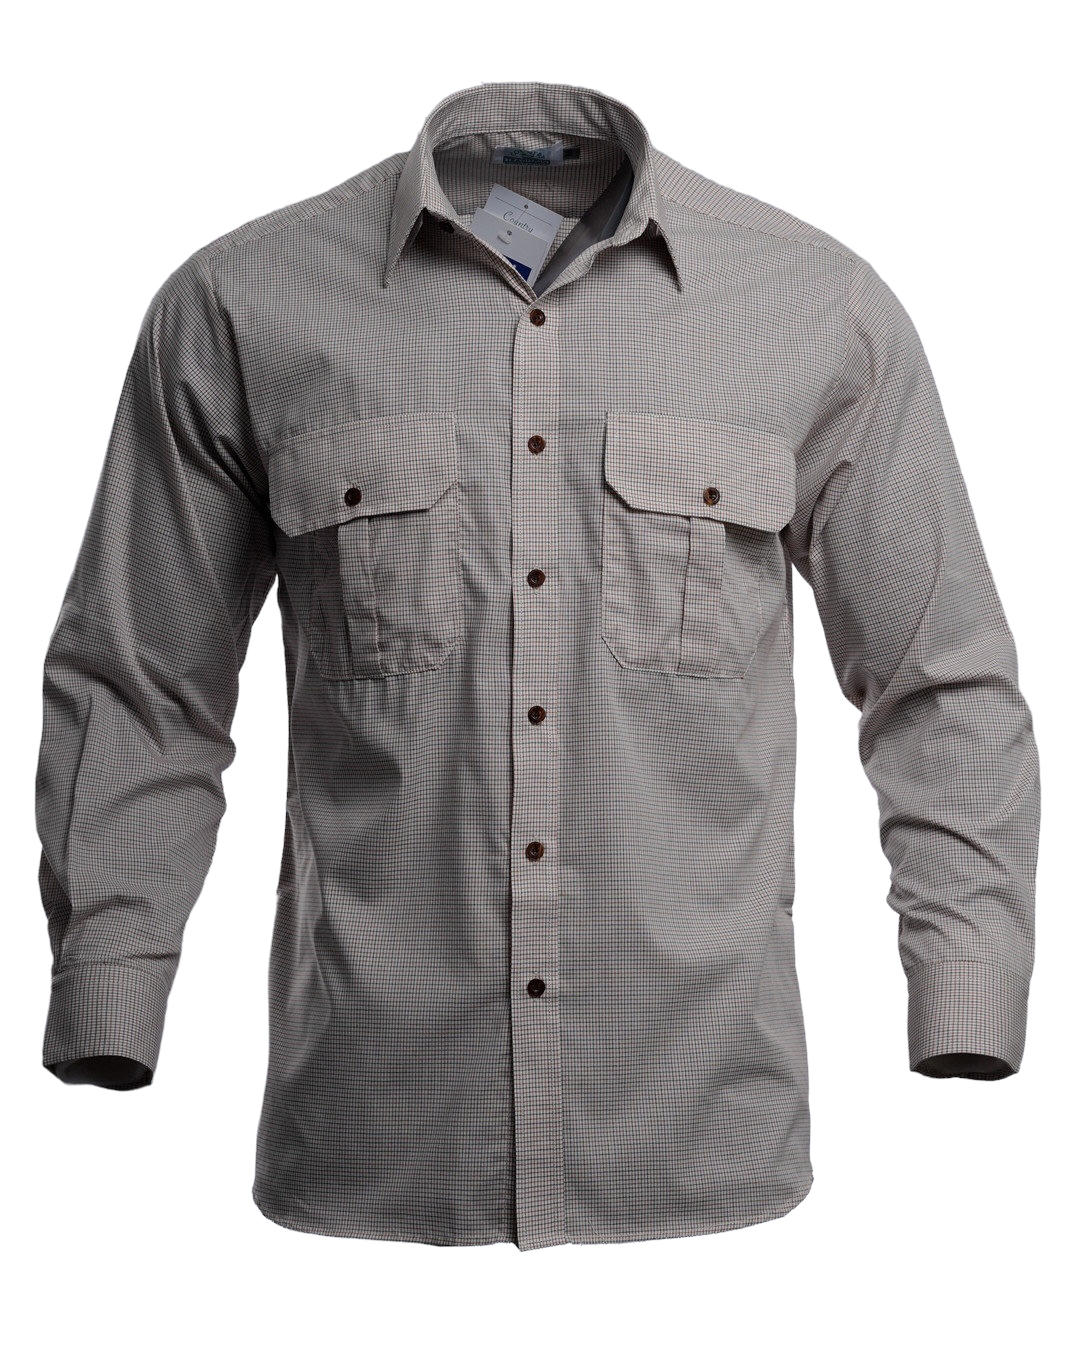 [SALE] Check Countryman Longsleeve Button Up Shirt - Fawn